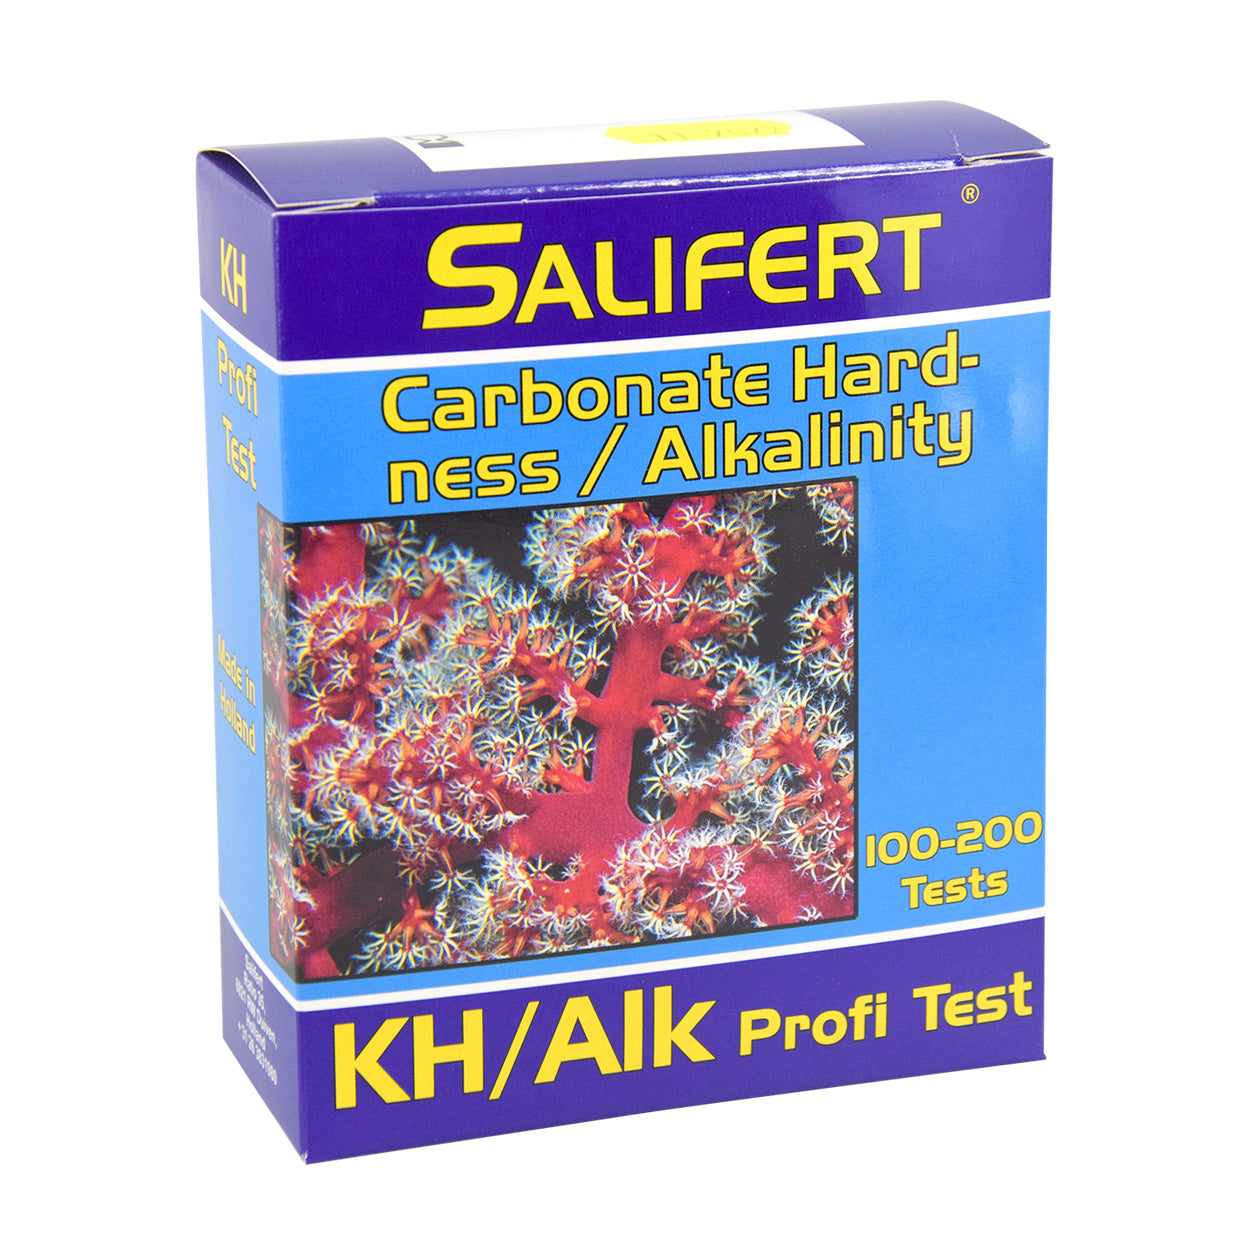 Salifert Carbonate Hardness/Alkalinity Test Kit